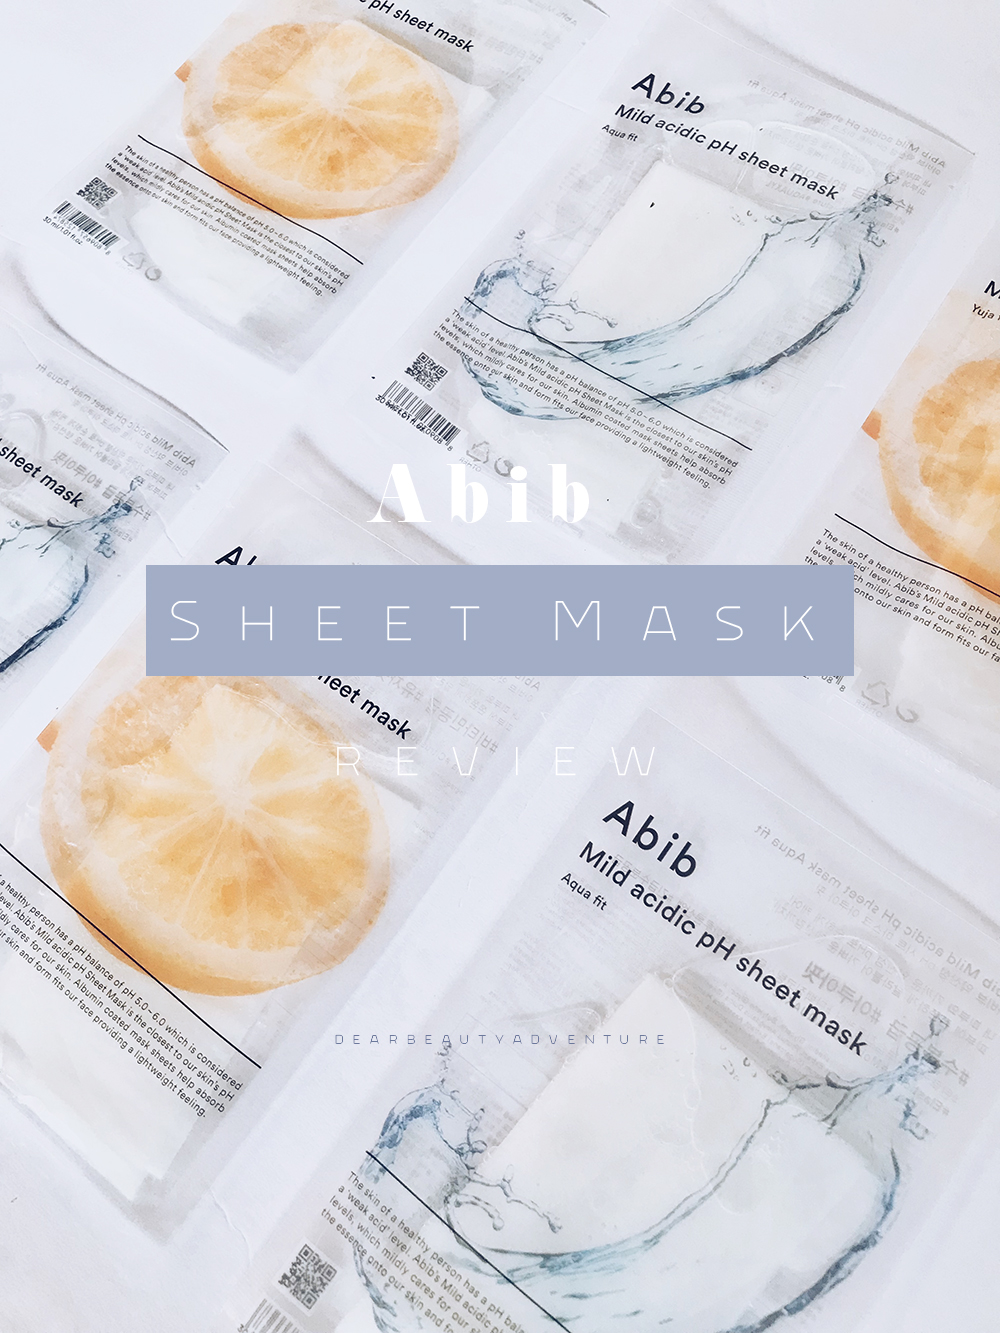 abib mild acidic ph sheet mask review yuja auqa fit